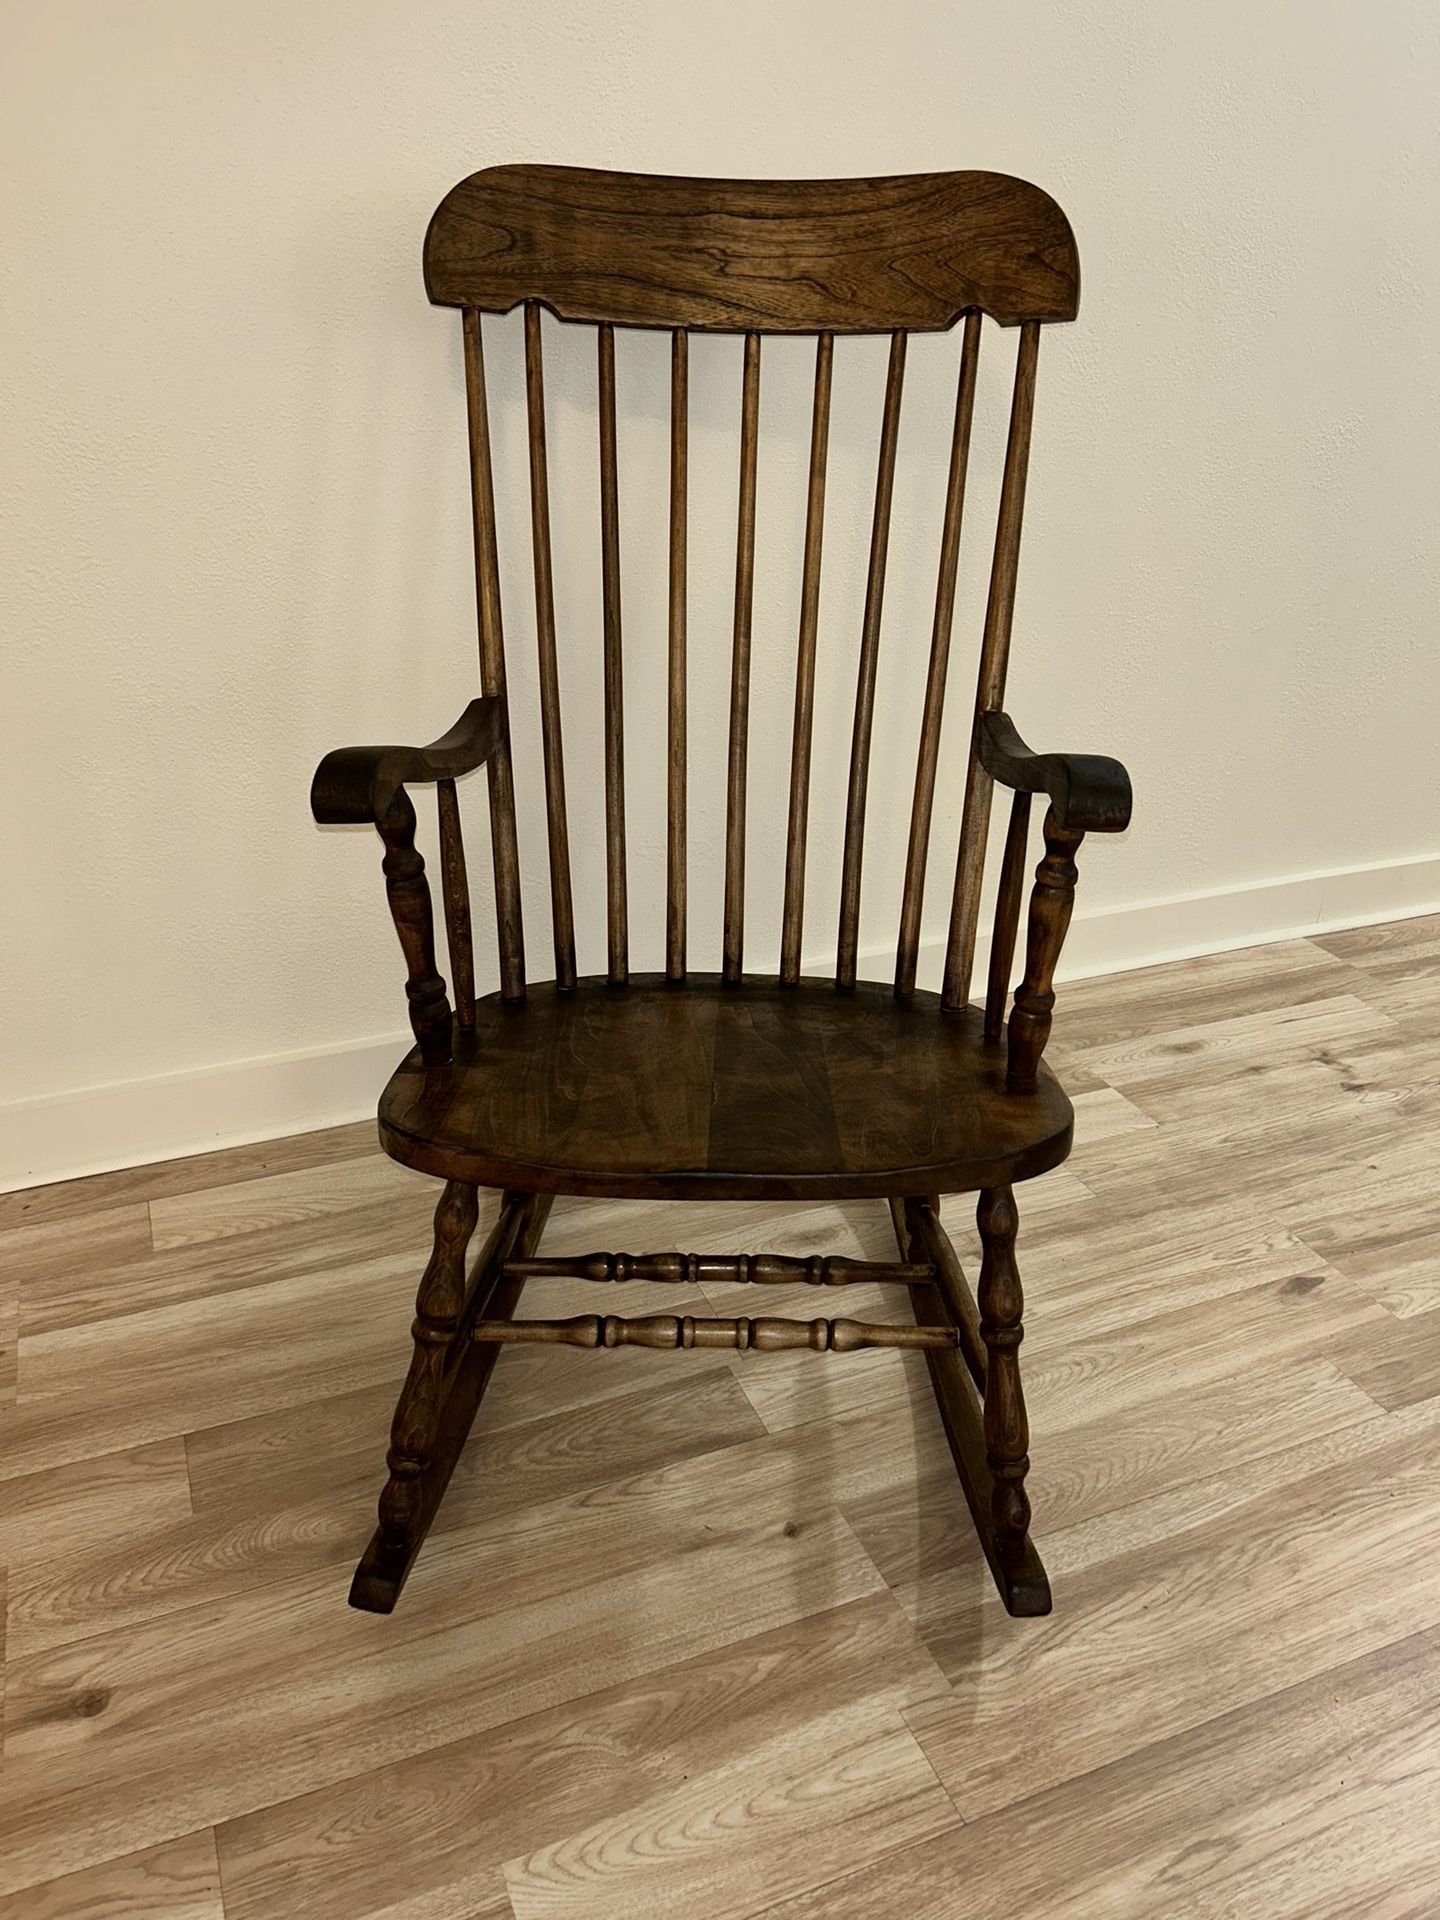 Refurbished, vintage wooden rocking chair 